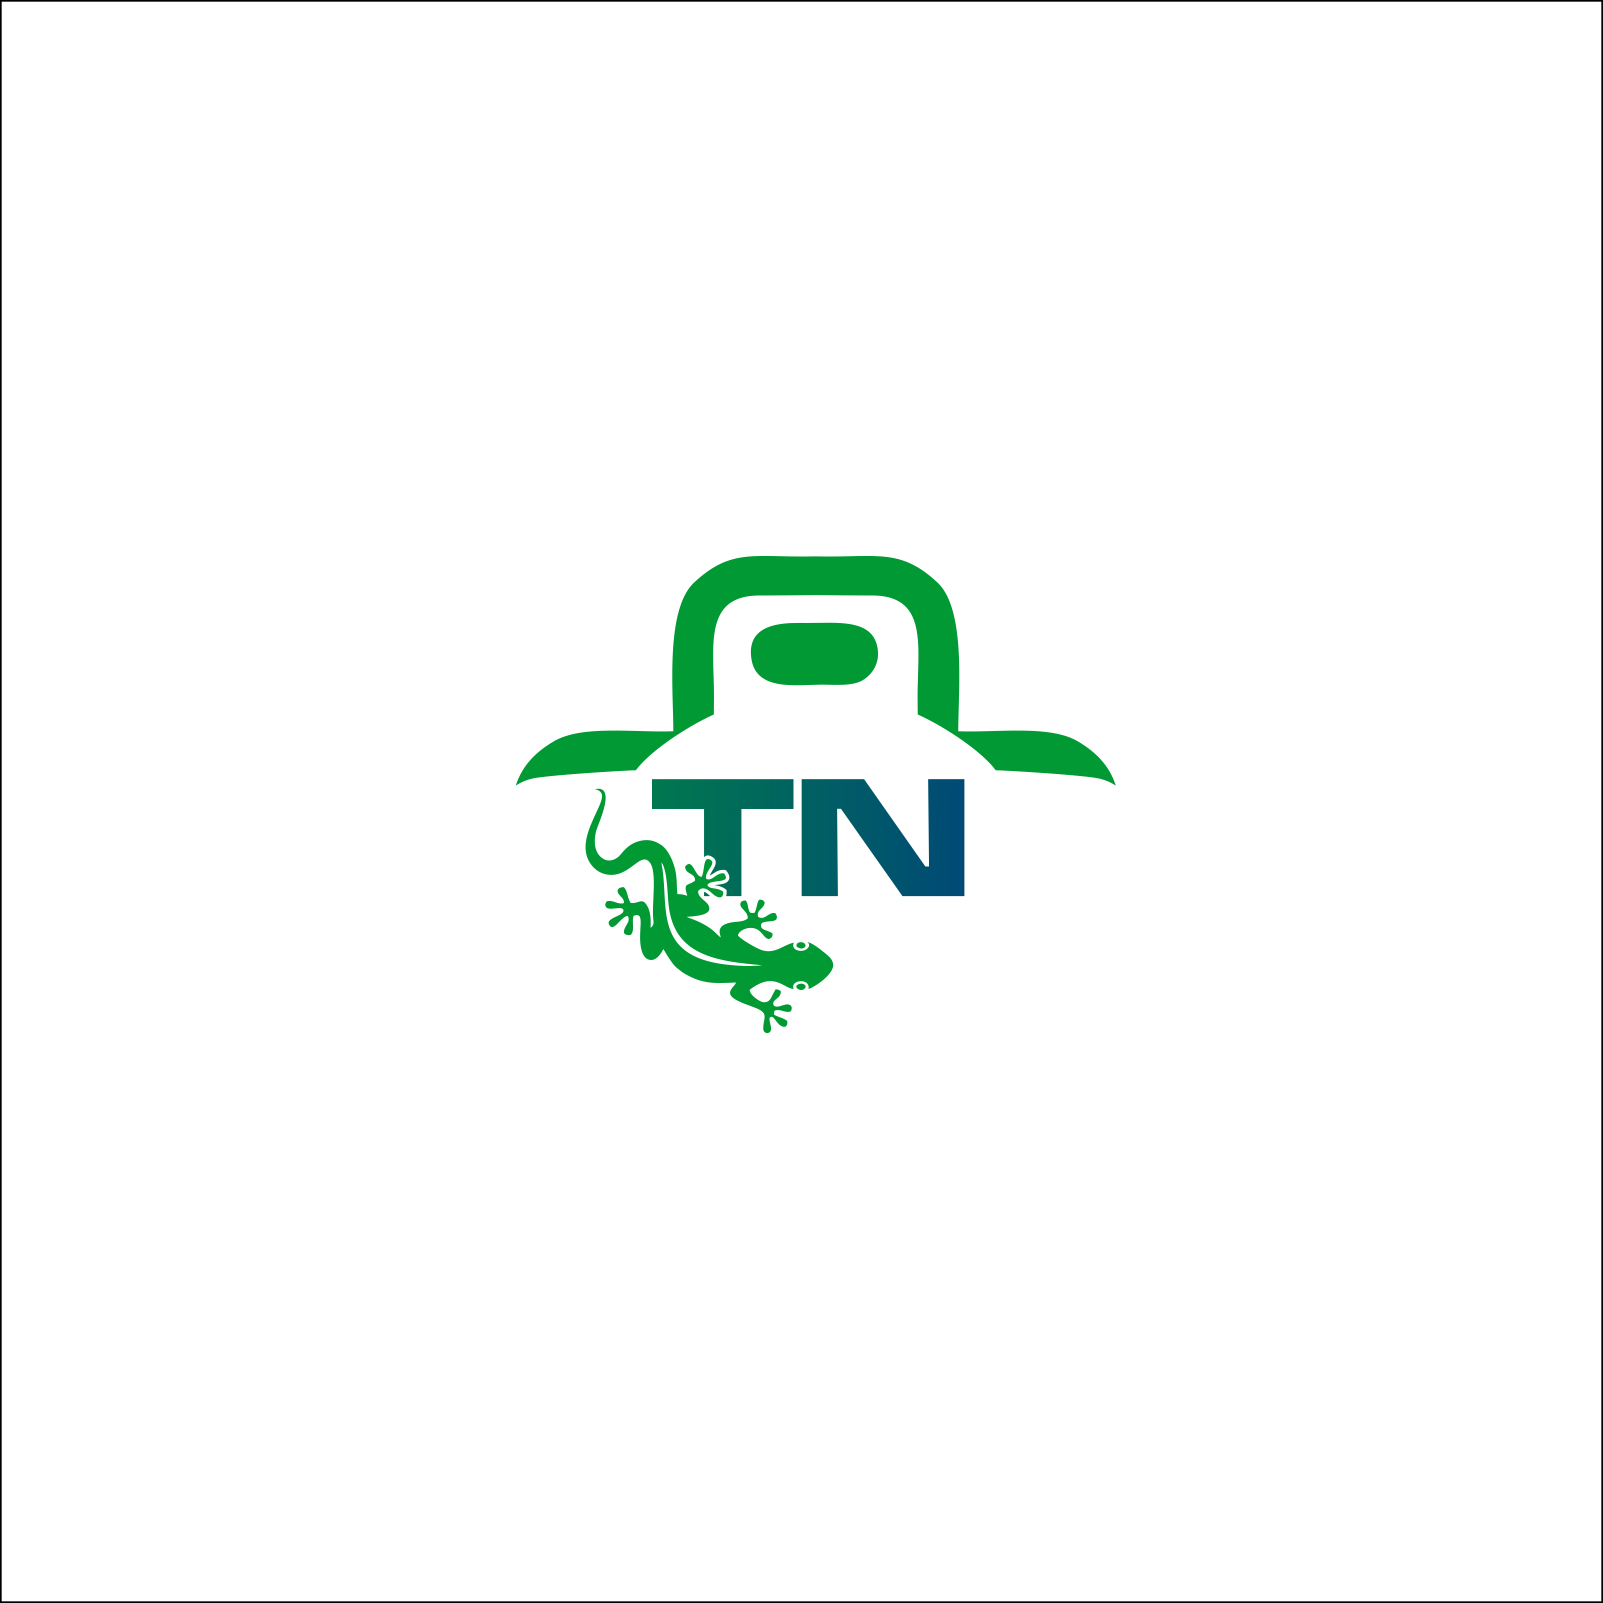 TN Letter logo icon design template elements - stock vector 2678354 |  Crushpixel